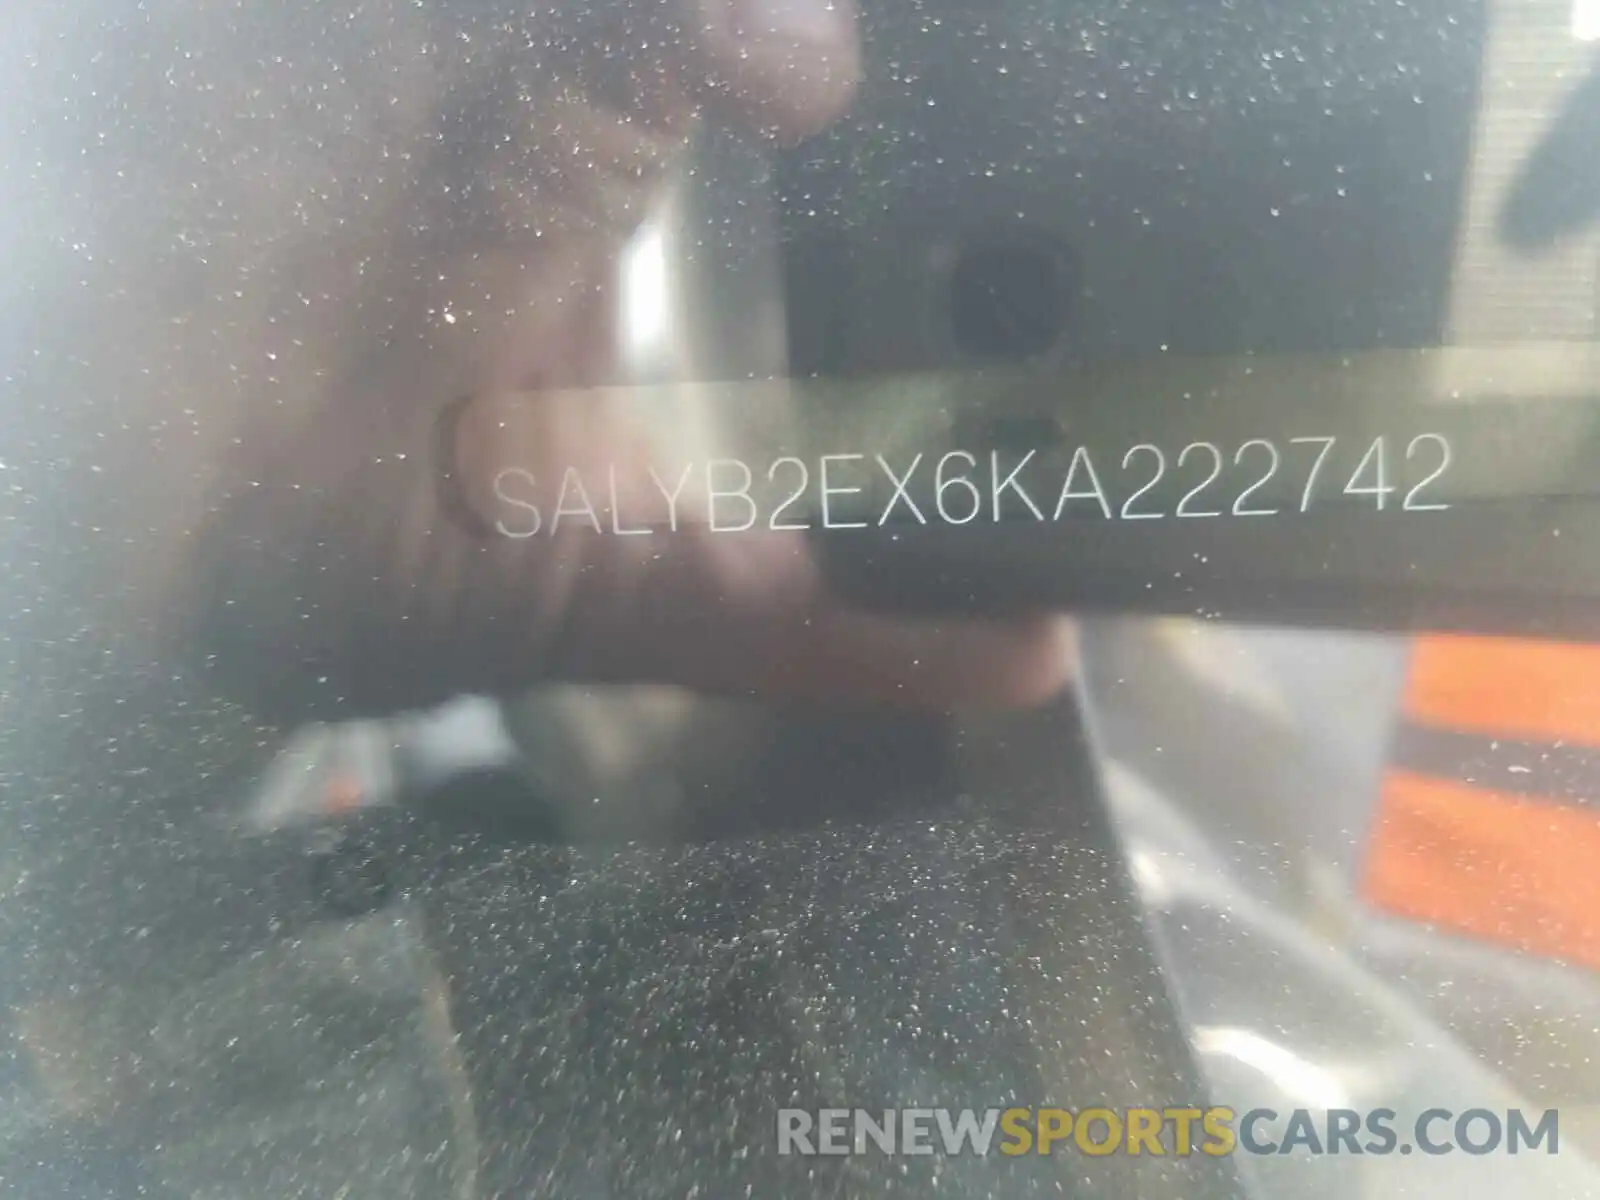 10 Photograph of a damaged car SALYB2EX6KA222742 LAND ROVER RANGEROVER 2019